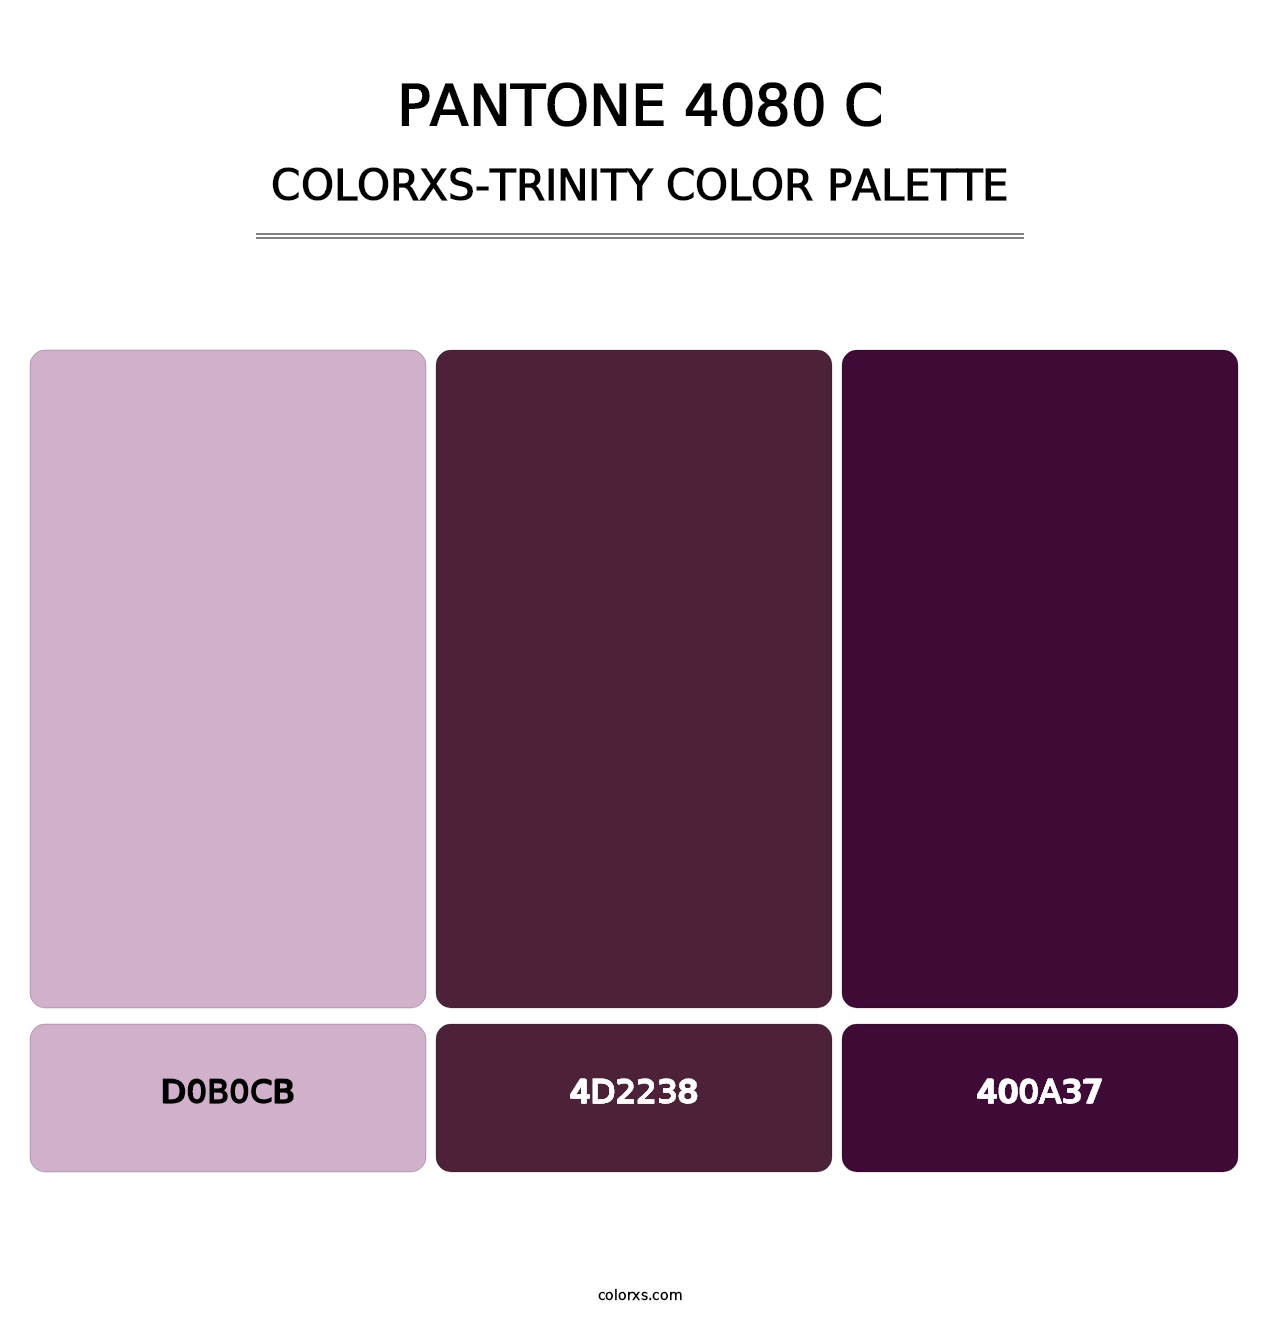 PANTONE 4080 C - Colorxs Trinity Palette